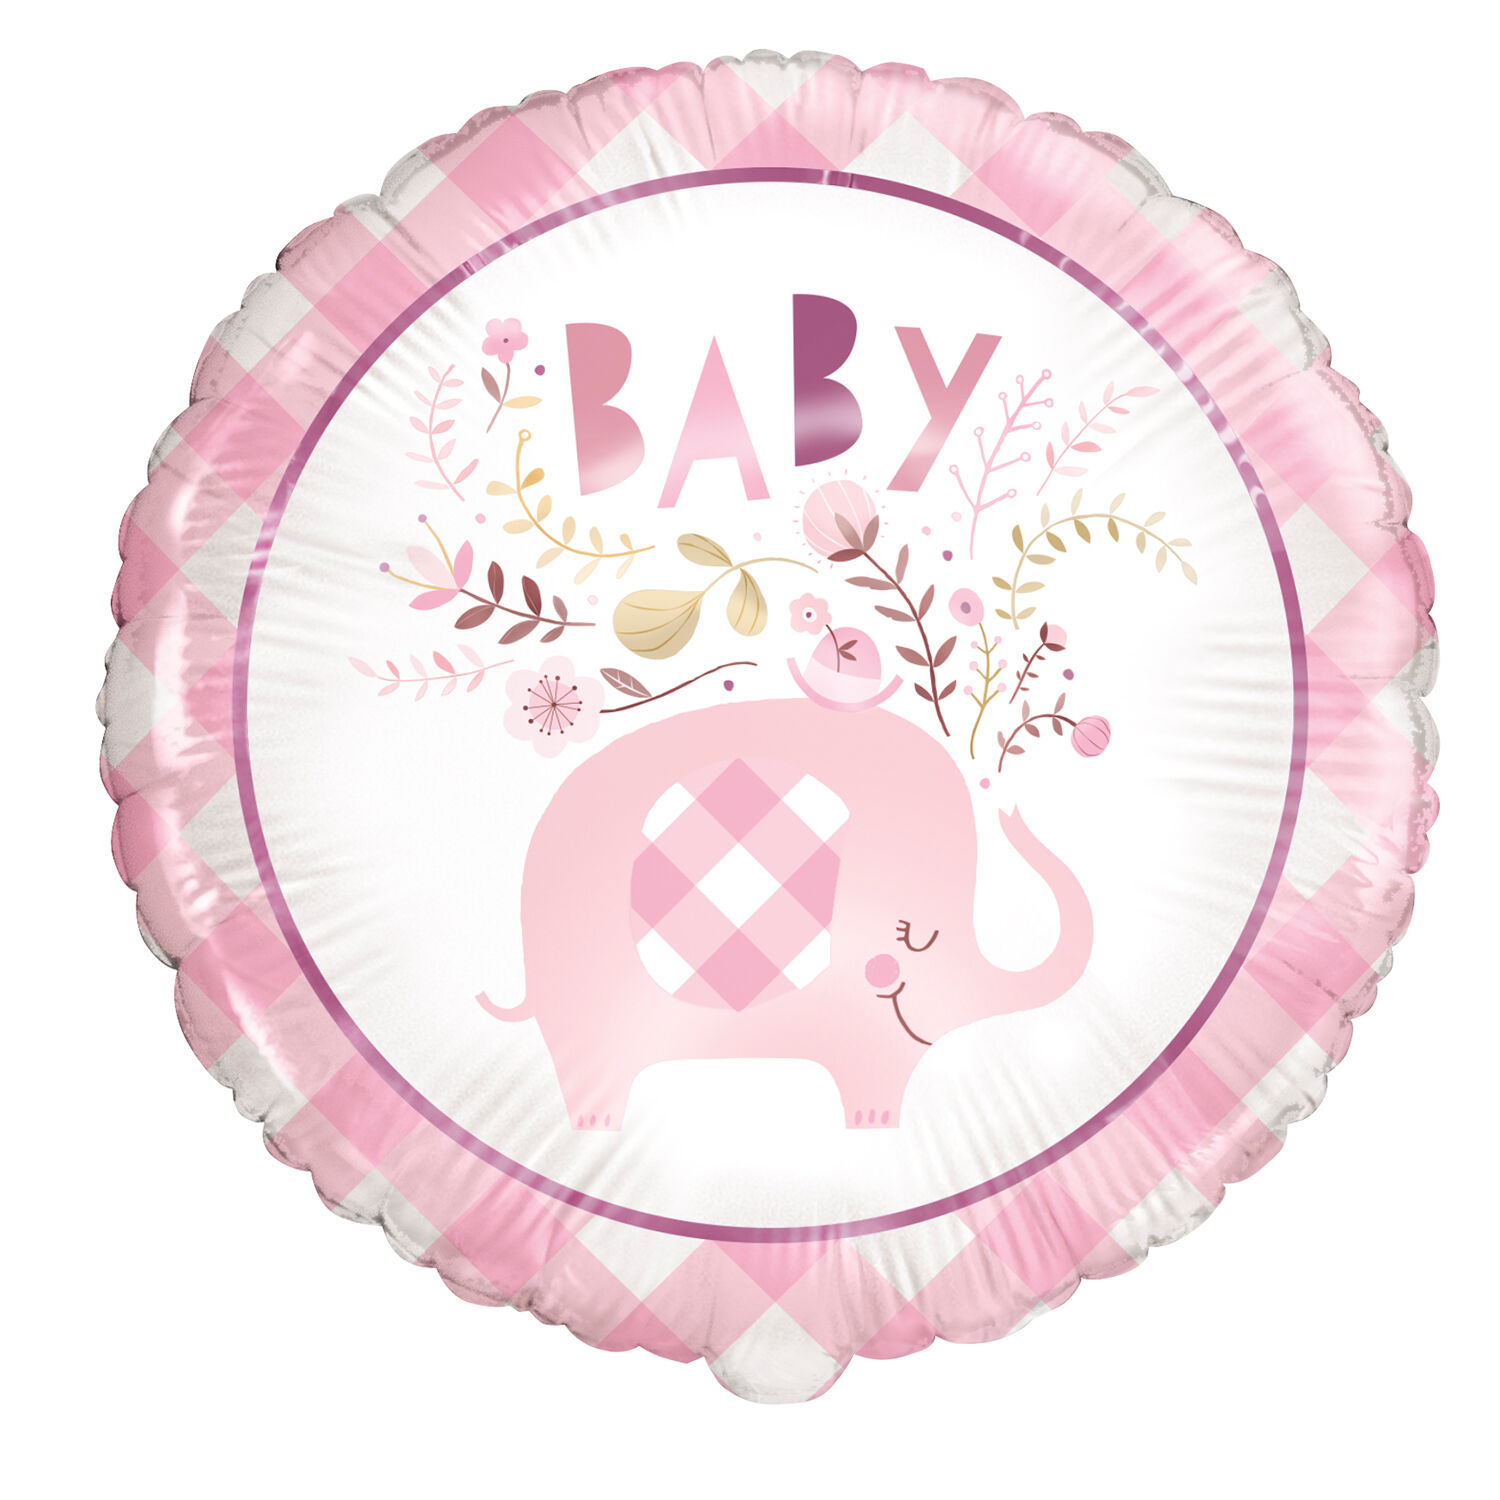 SALE Folienballon Babyparty rosa Elefant, 45 cm